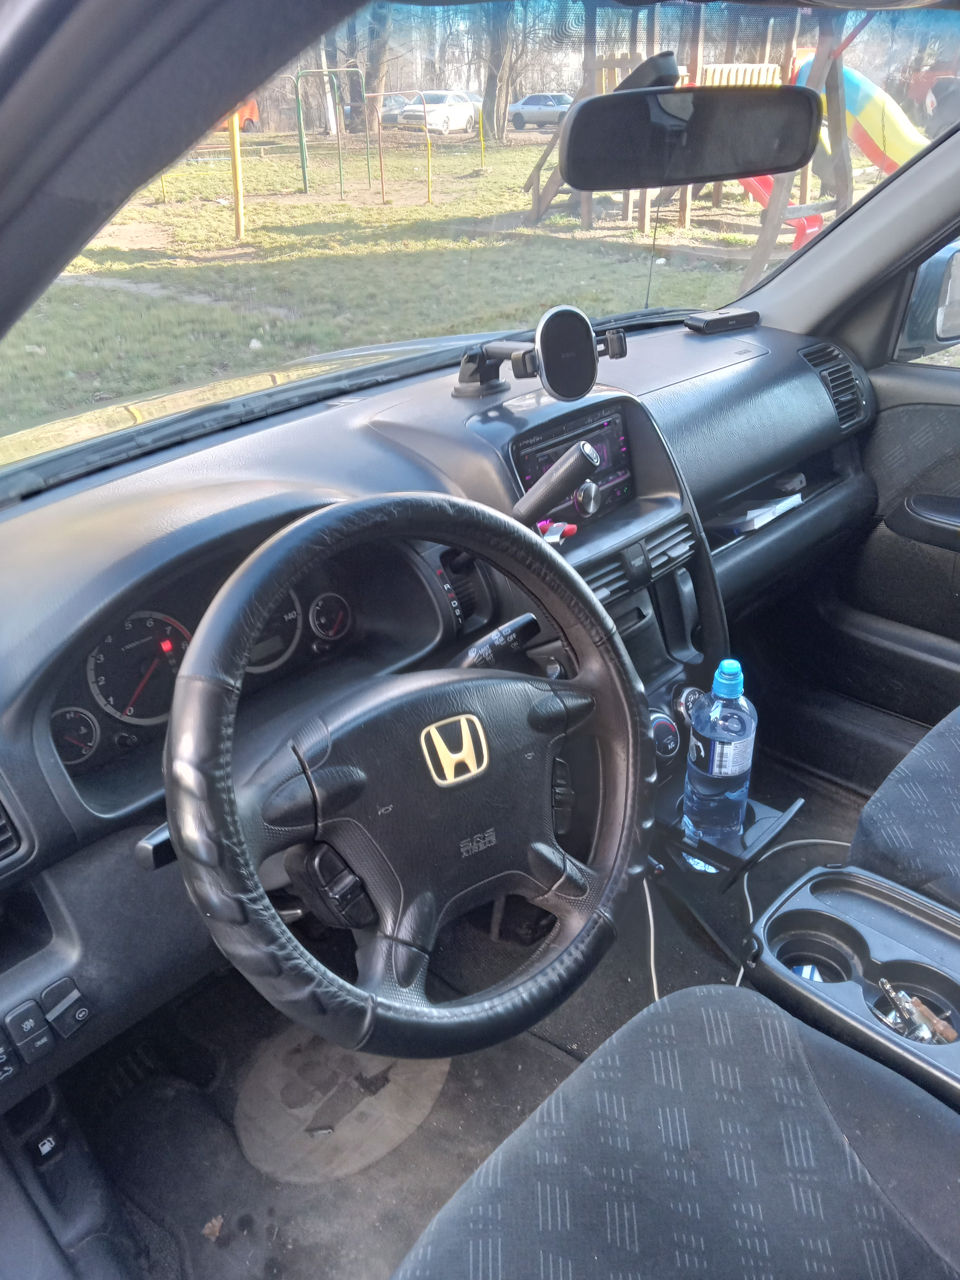 Honda CR-V foto 2